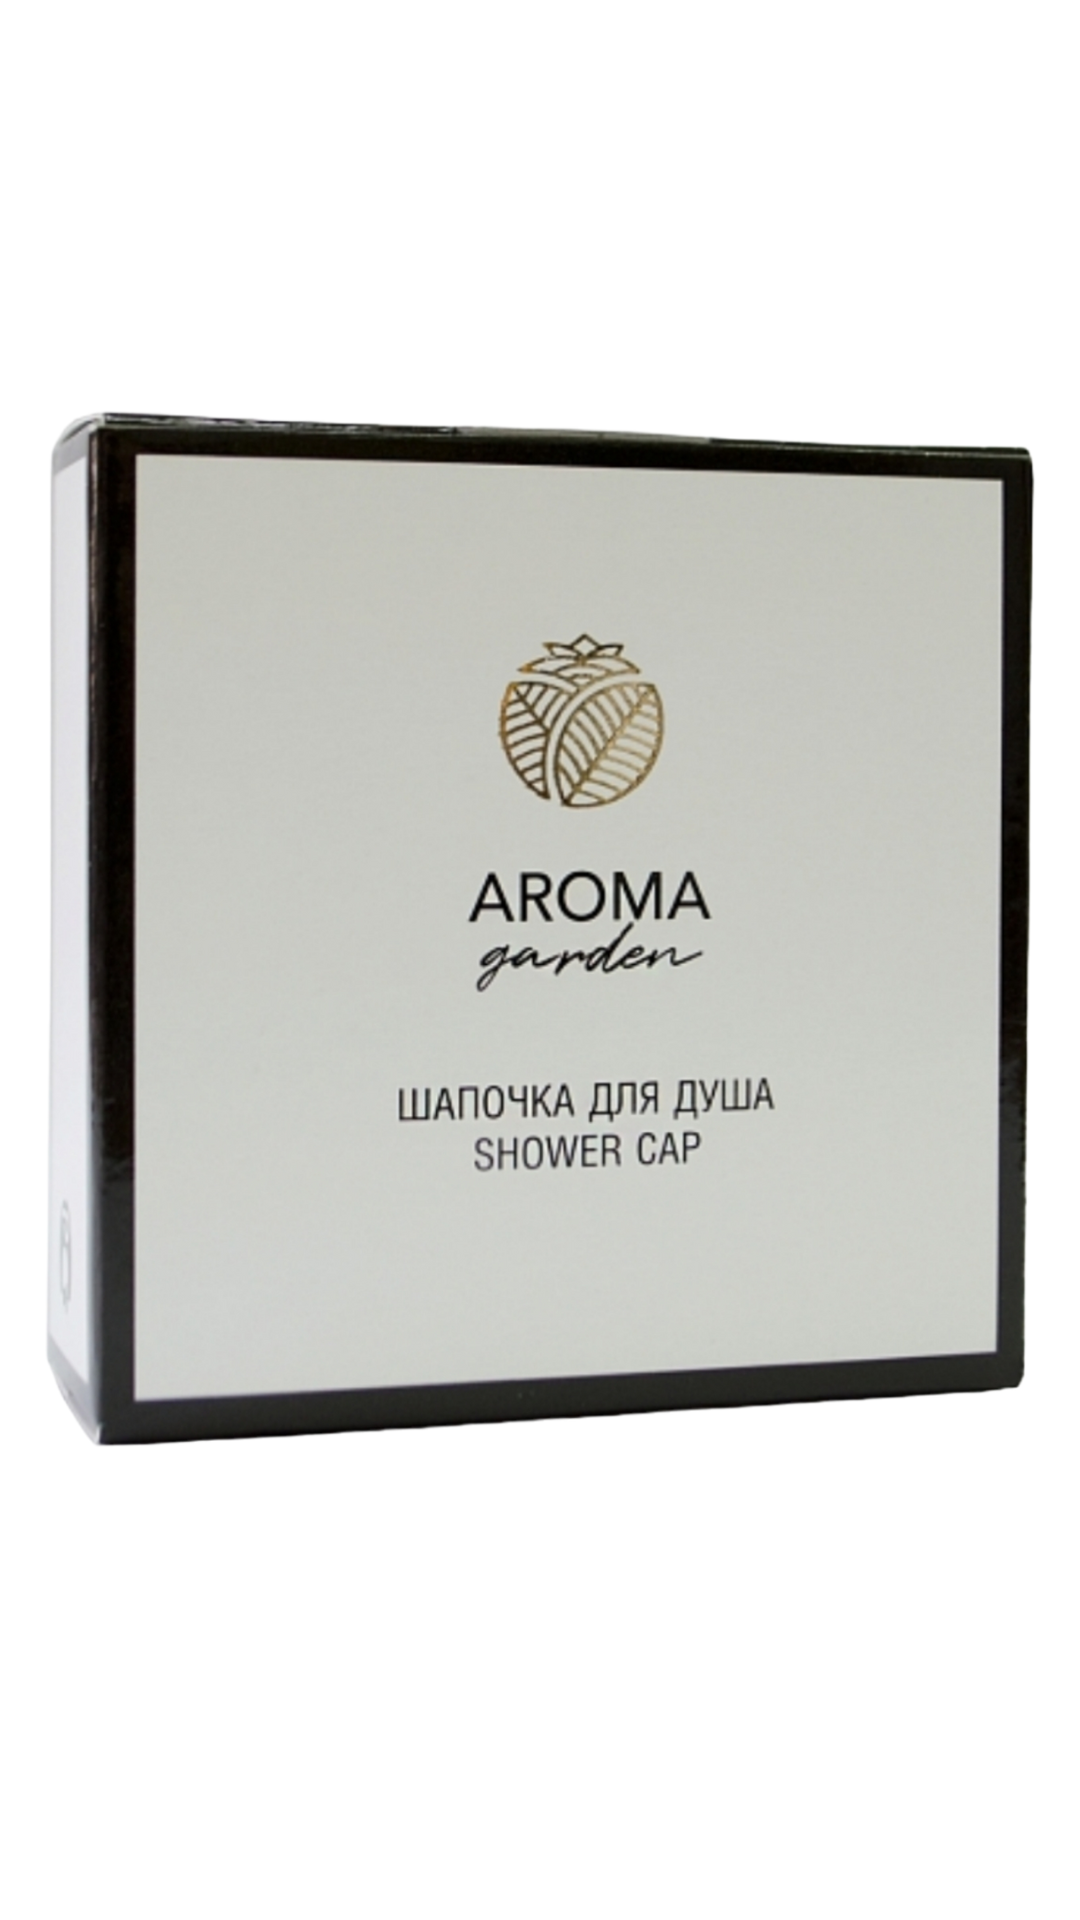 Шапочки для душа Aroma Garden картон 250 шт. aroma garden ароматизатор саше дыня